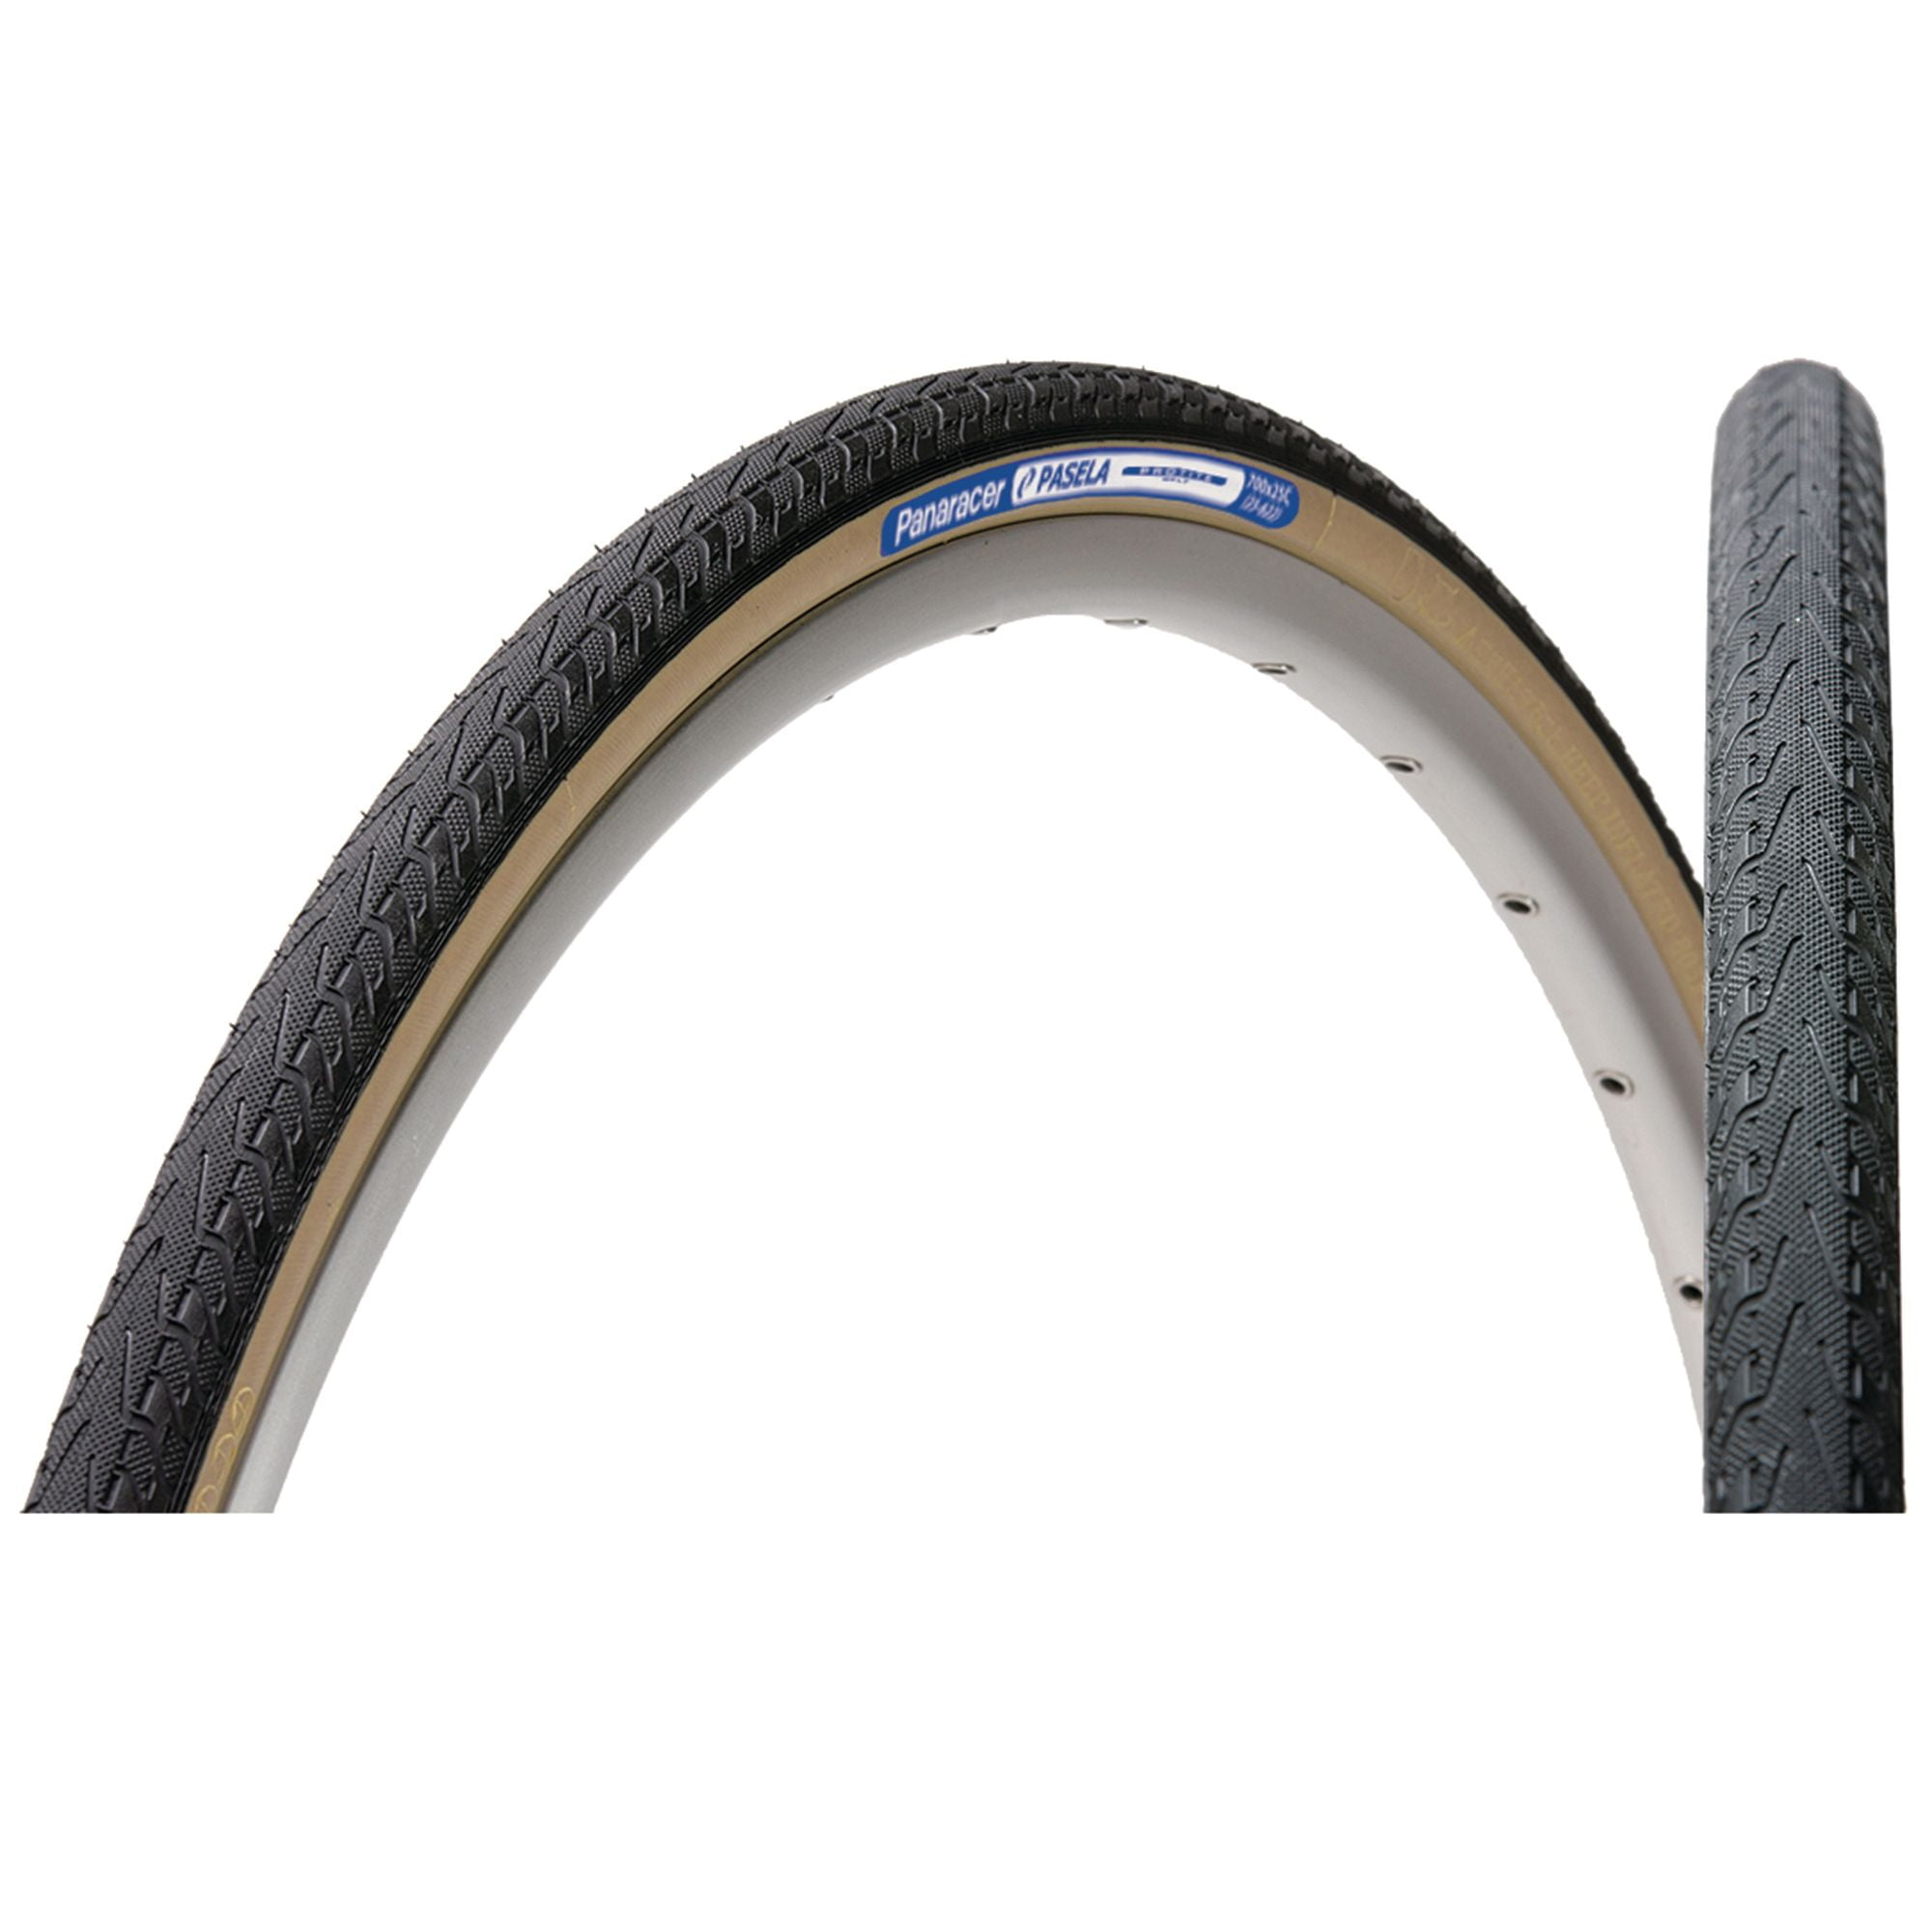 Panaracer PT Pasela 700x23c folding tyre Tan sidewall Puncture protection 